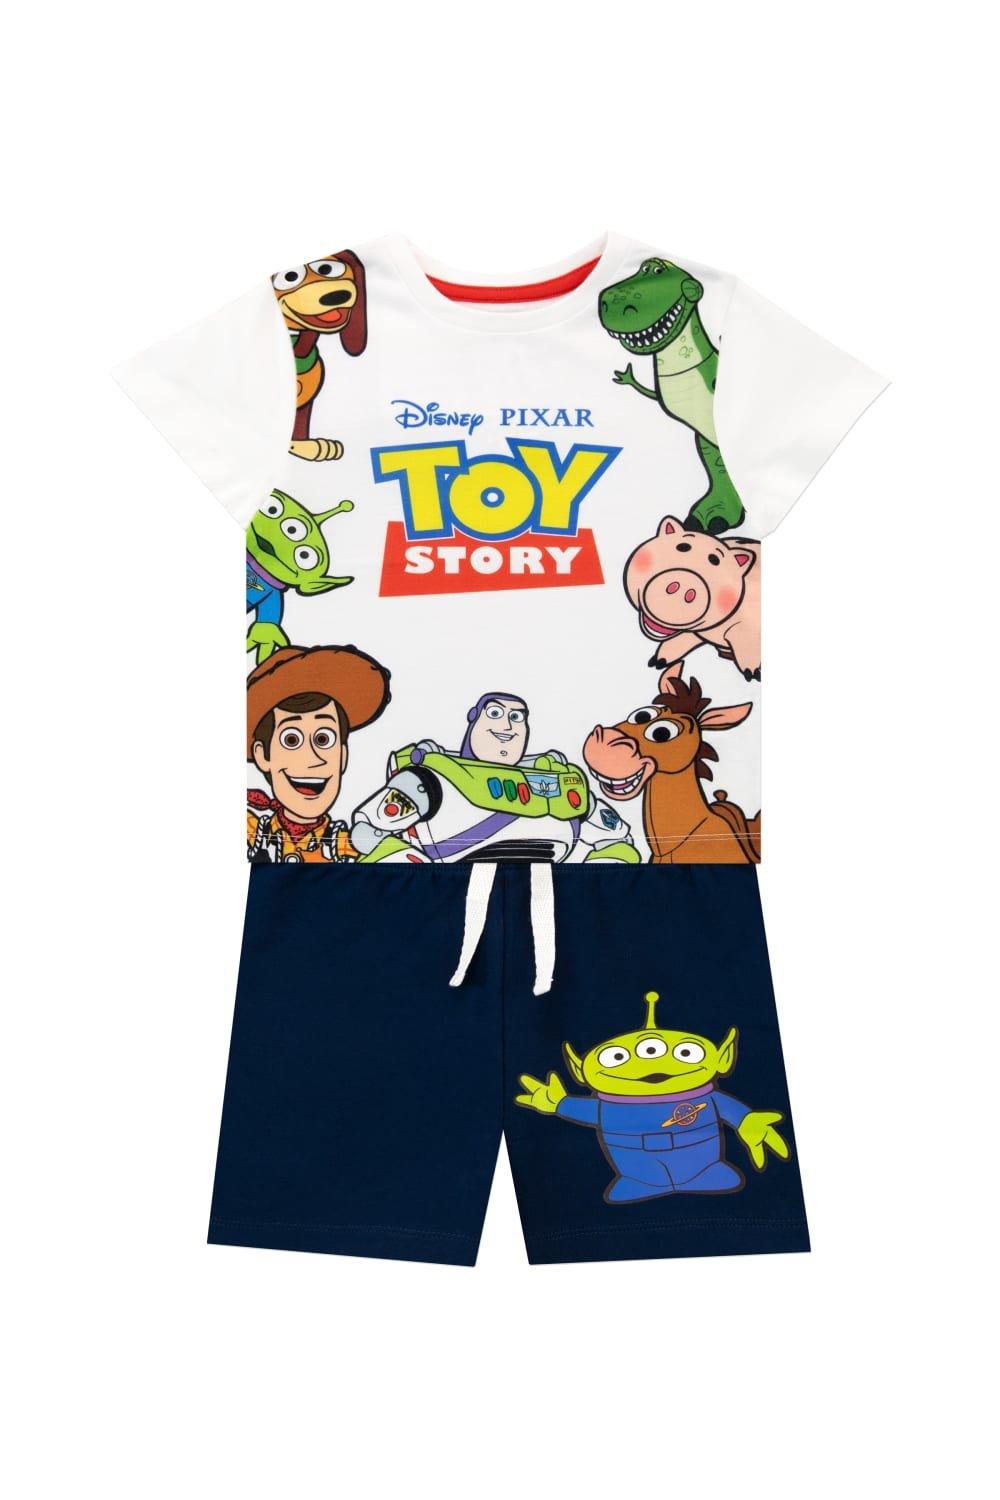 Toy Story Woody Buzz Rex Slinky Hamm and Bullseye T-Shirt And Short Set